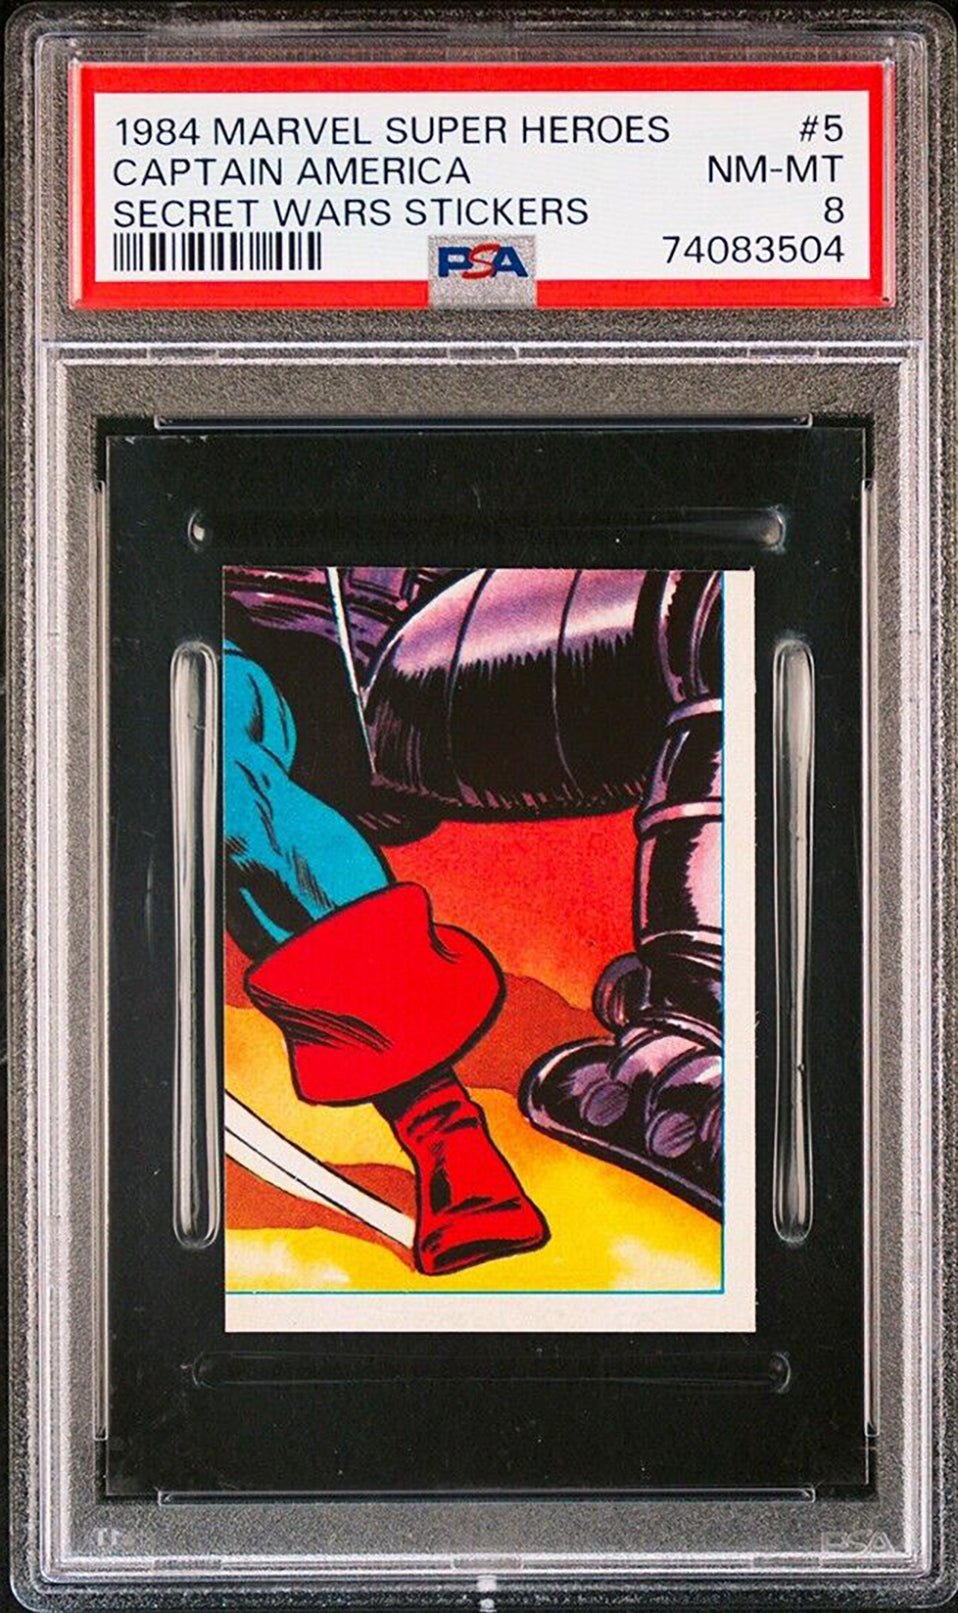 CAPTAIN AMERICA PSA 8 1984 Marvel Super Heroes Secret Wars Sticker #5 C1 Marvel Graded Cards Sticker - Hobby Gems